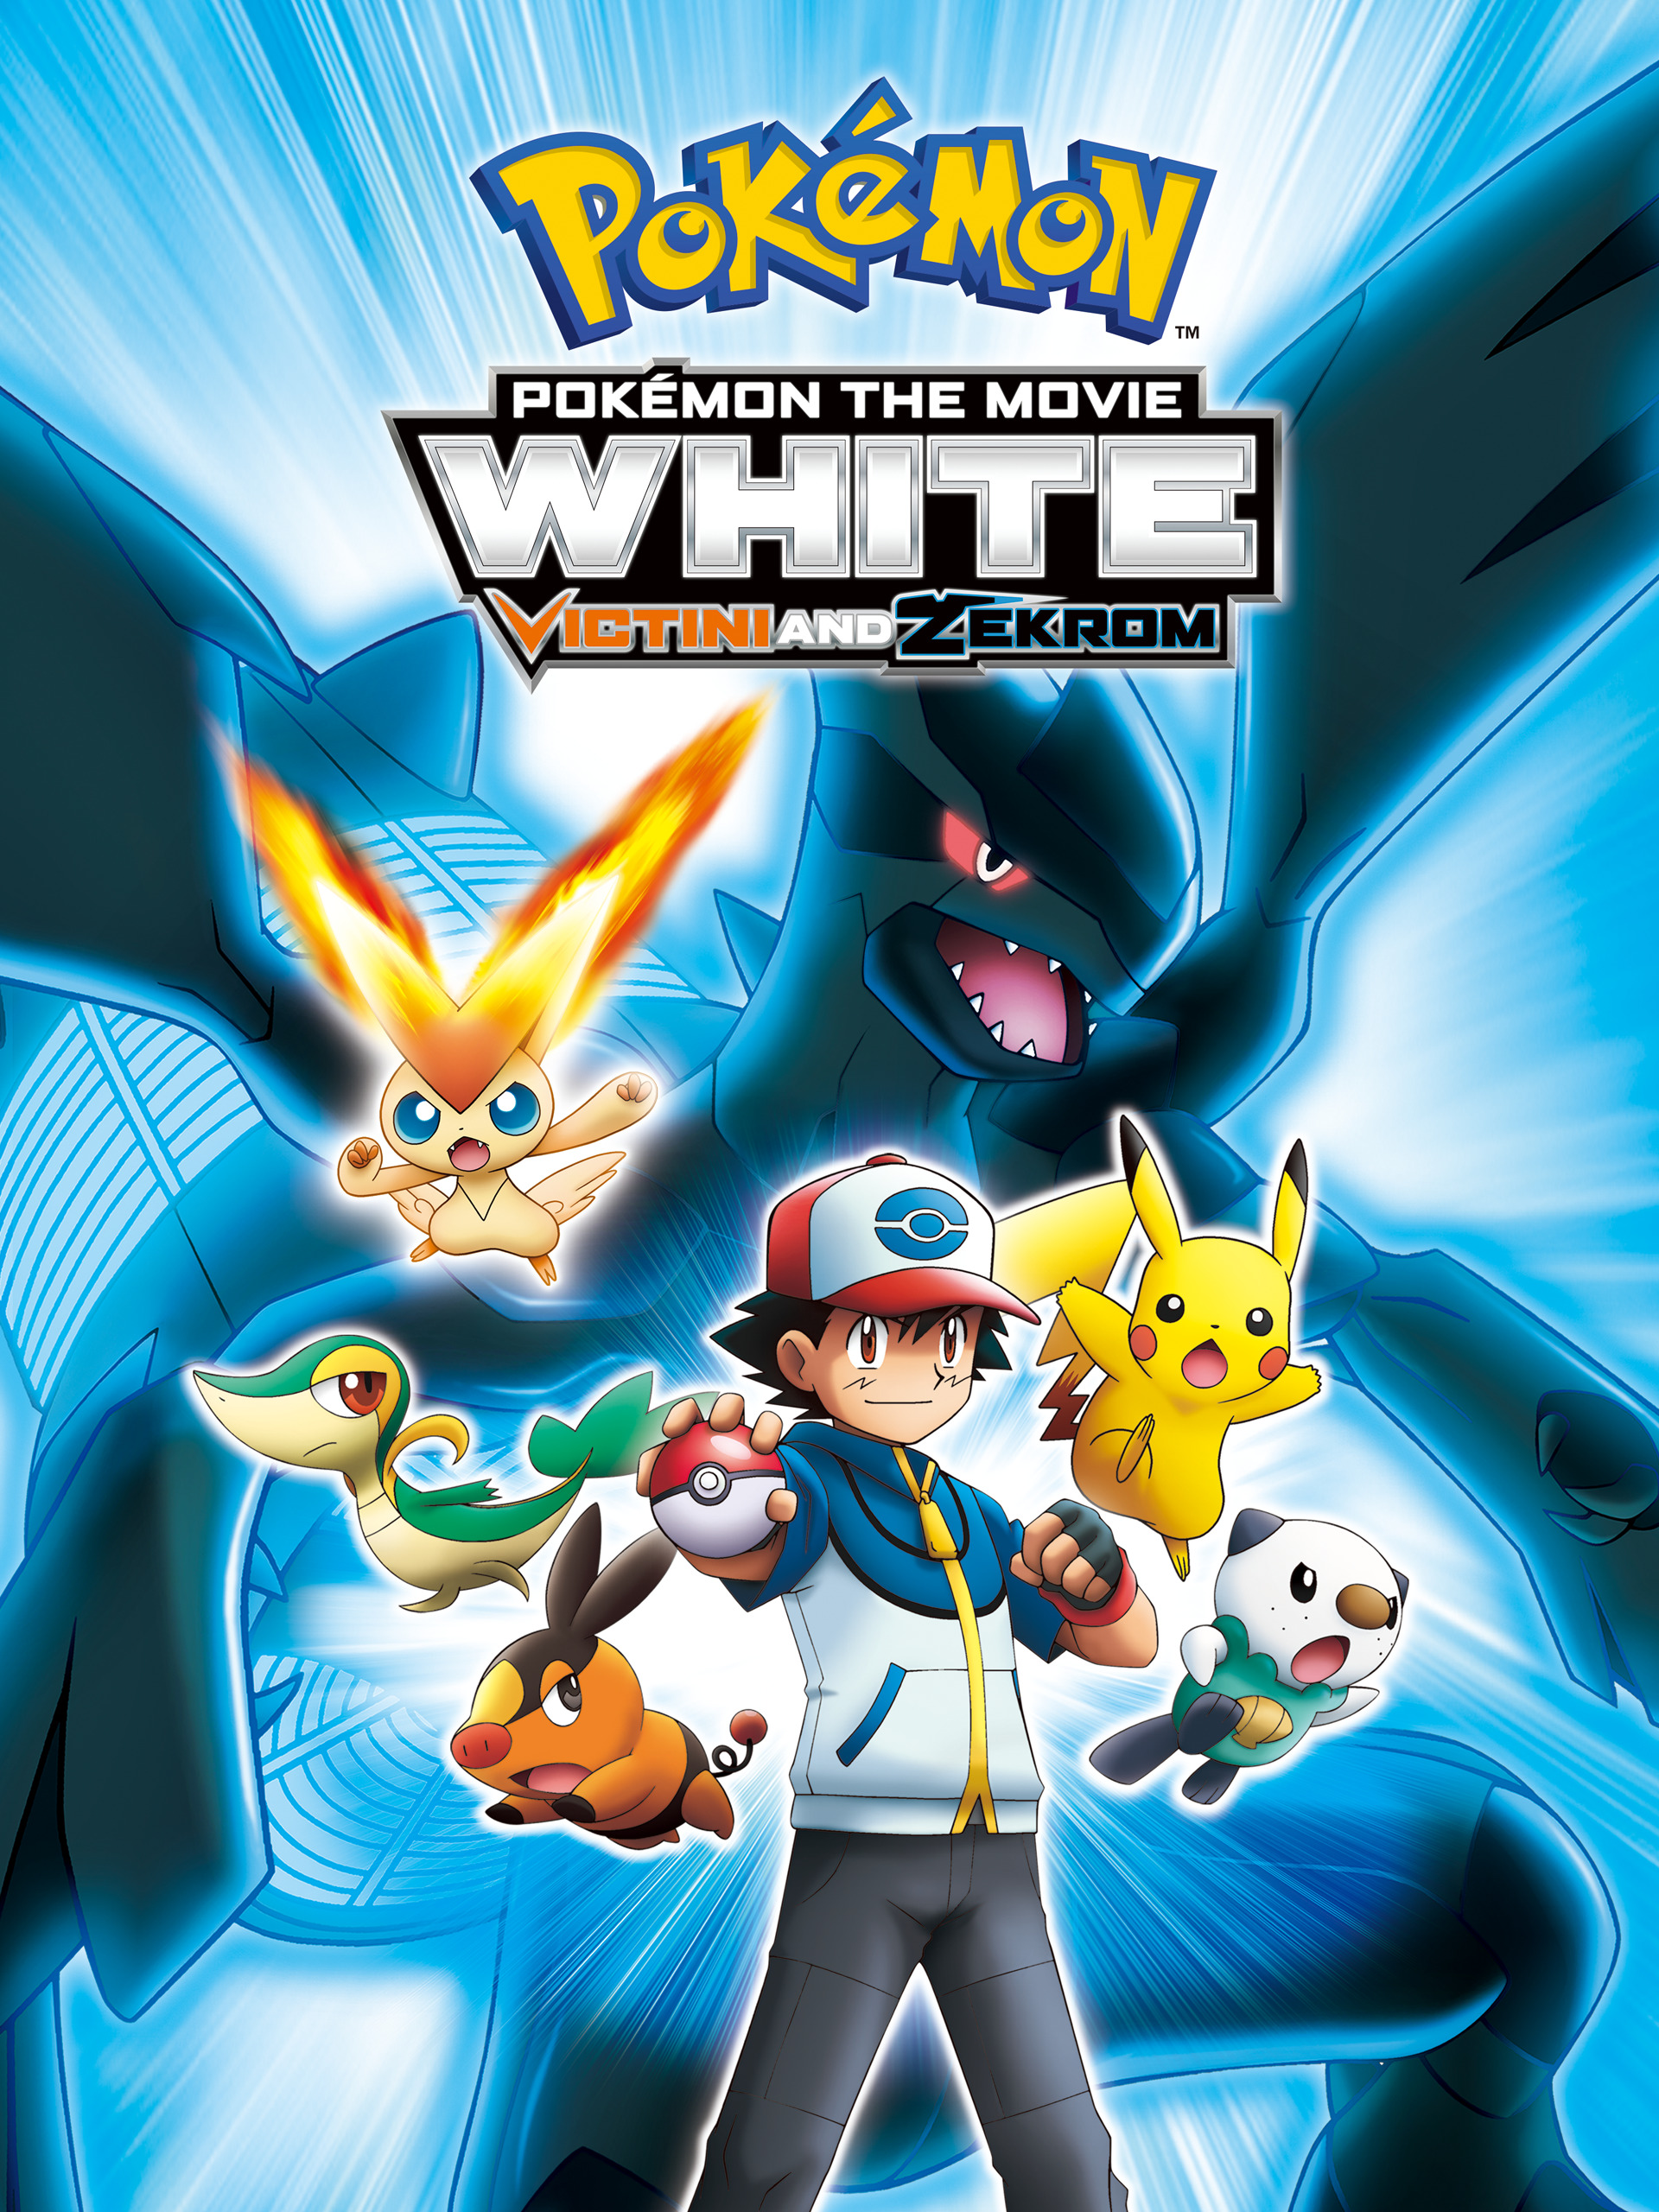 Pokemon The Movie White Victini and Zekrom วิคตินี กับ ผู้กล้าสีขาว เรชิรัม 14 พากย์ไทย